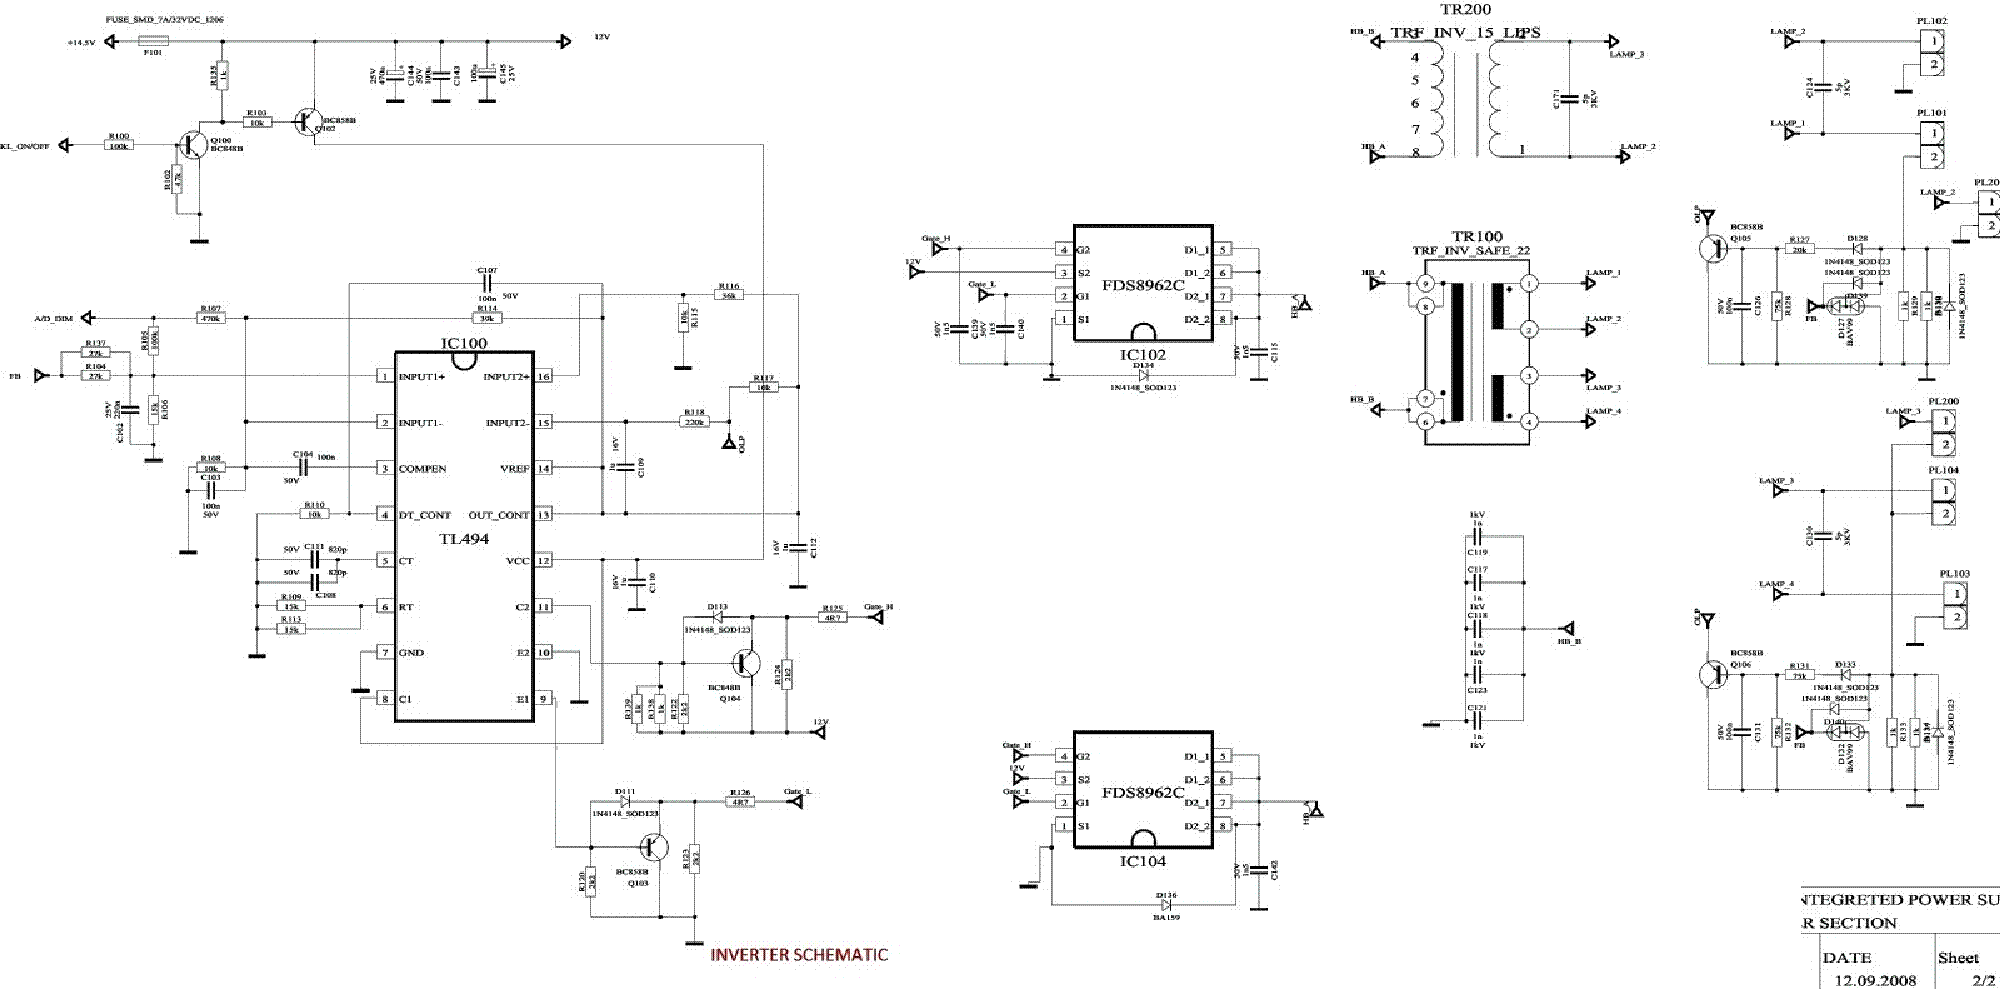 Rashid power electronics pdf download